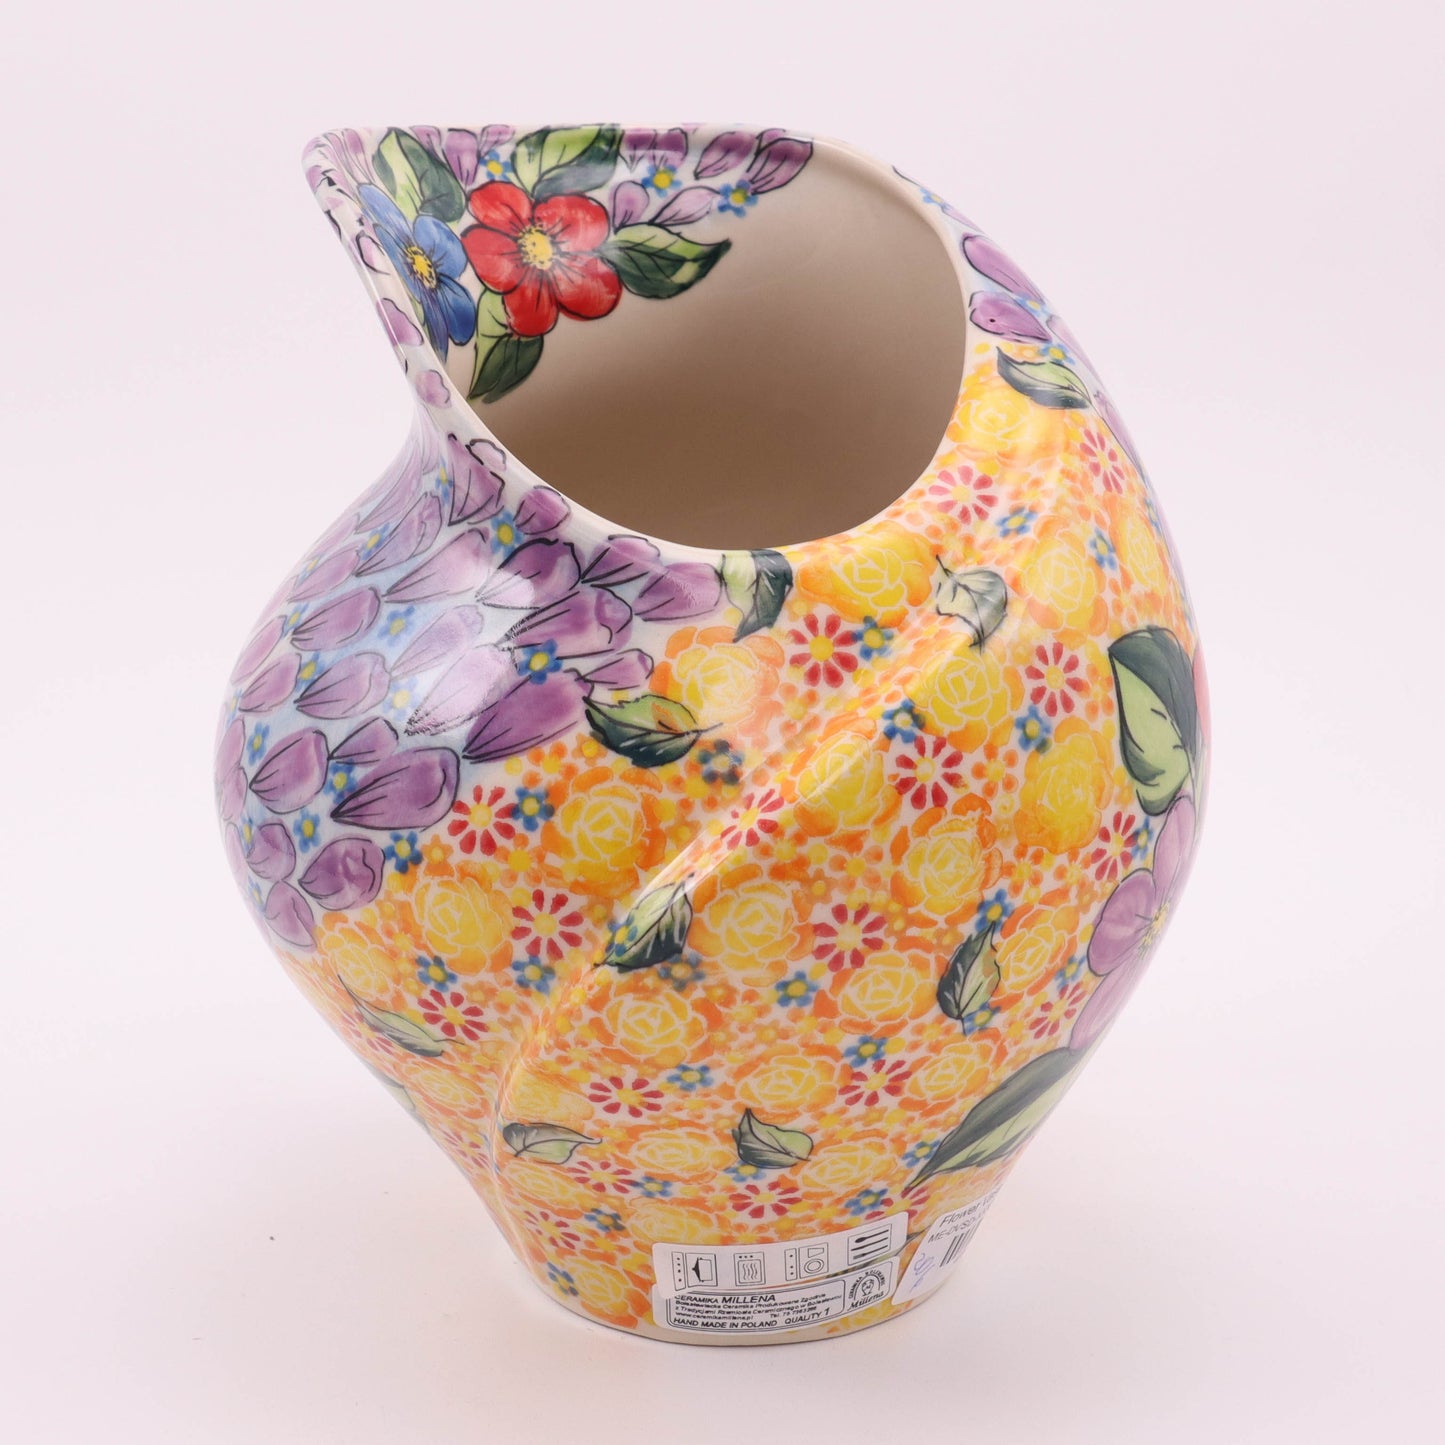 Flower Vase Pattern: A26